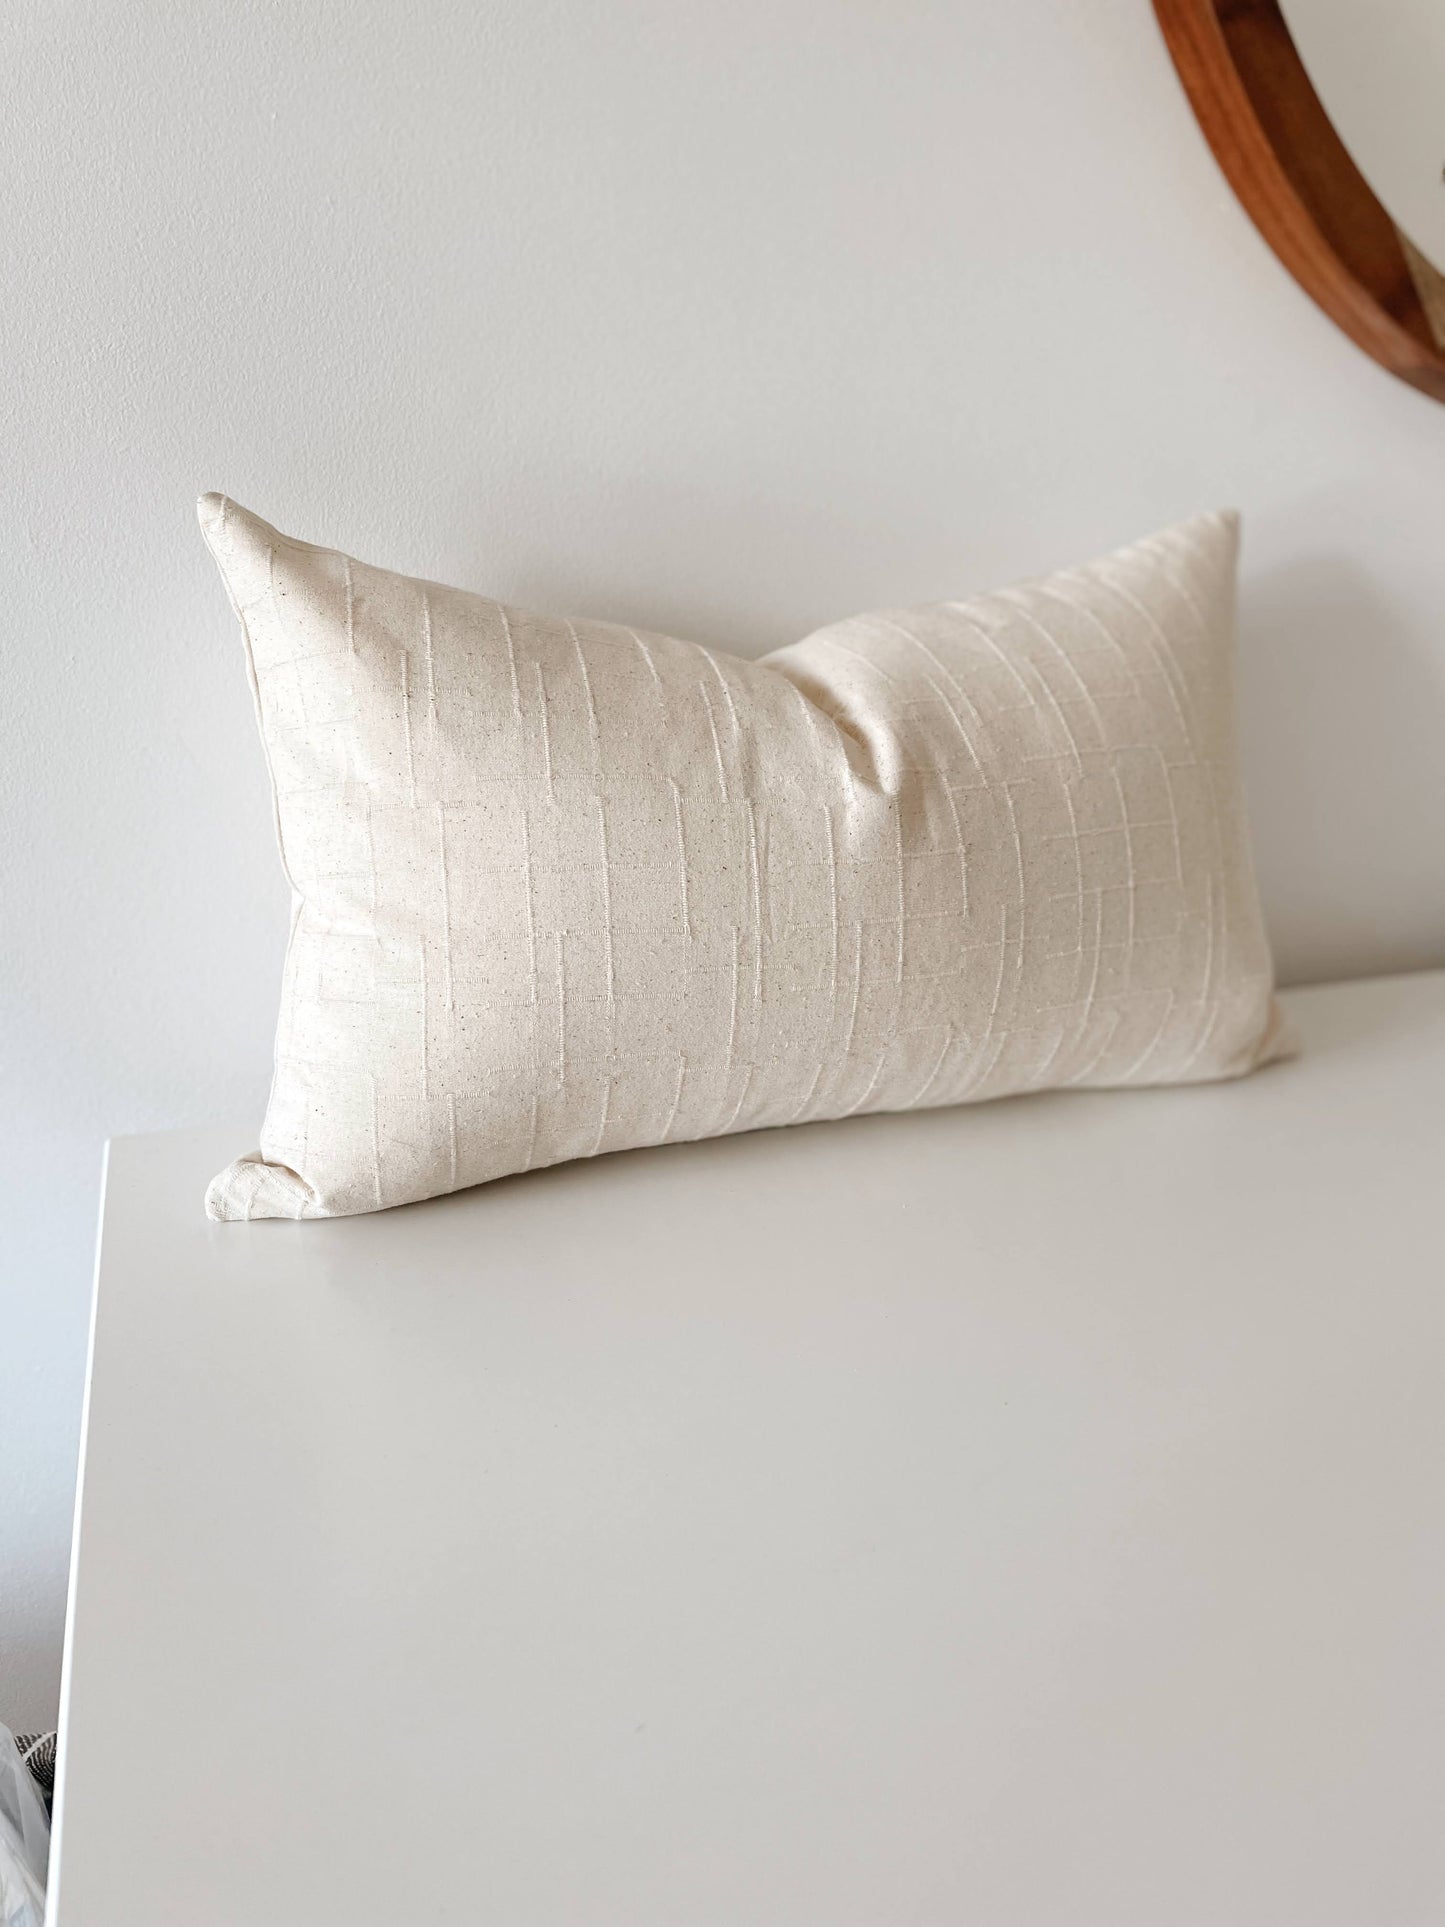 Aspen Woven Pillow Cover